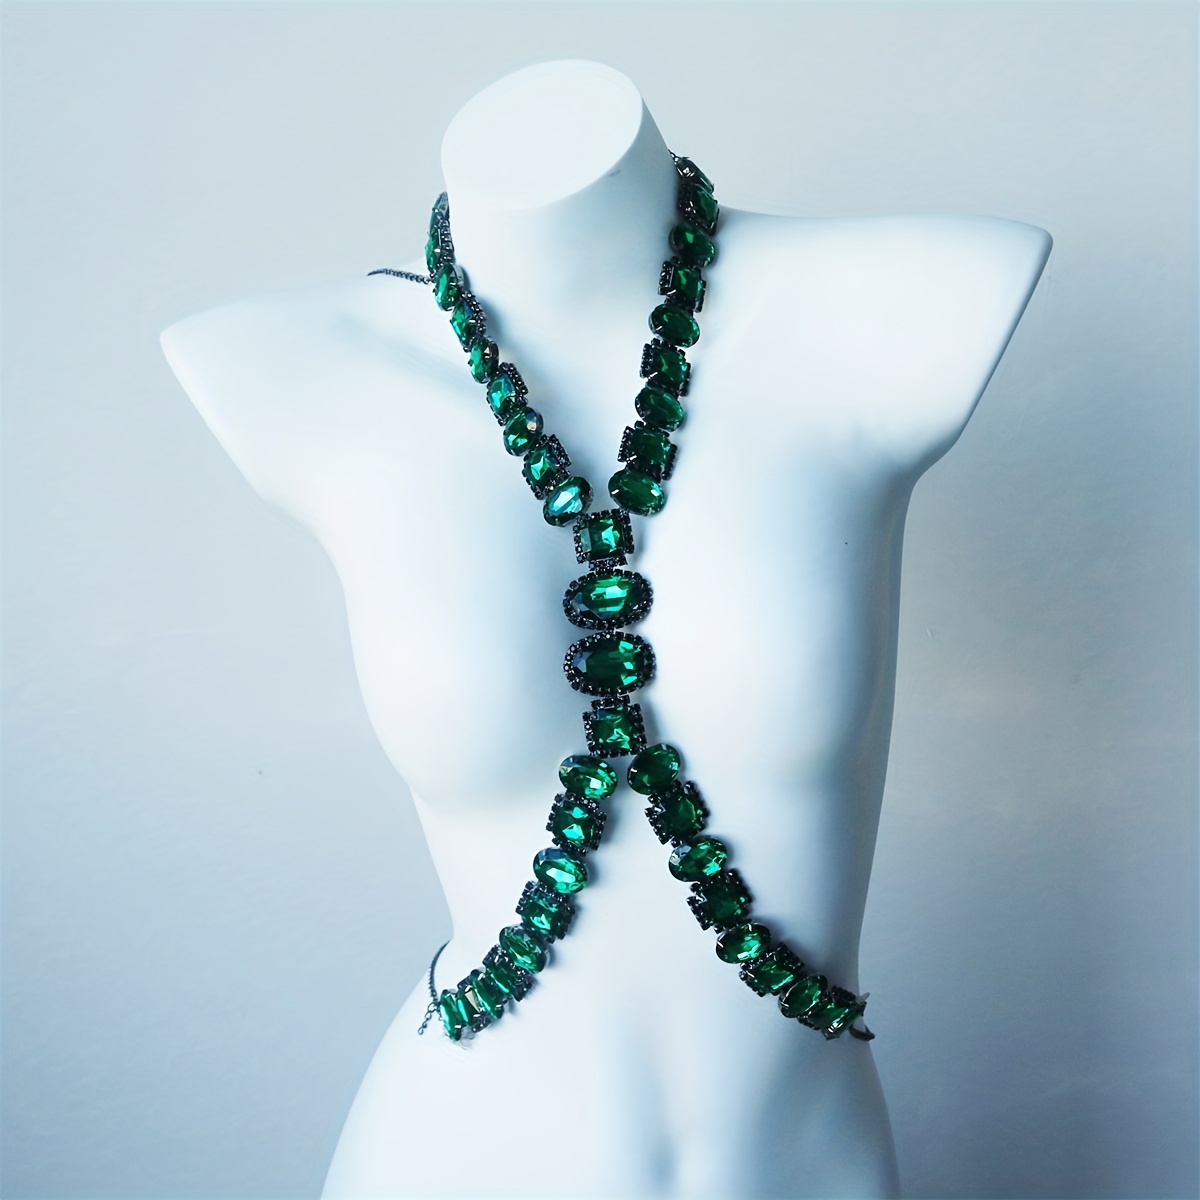 Jewelry Rhinestone Body Chain Sexy Chest Chain Body Accessories For Men